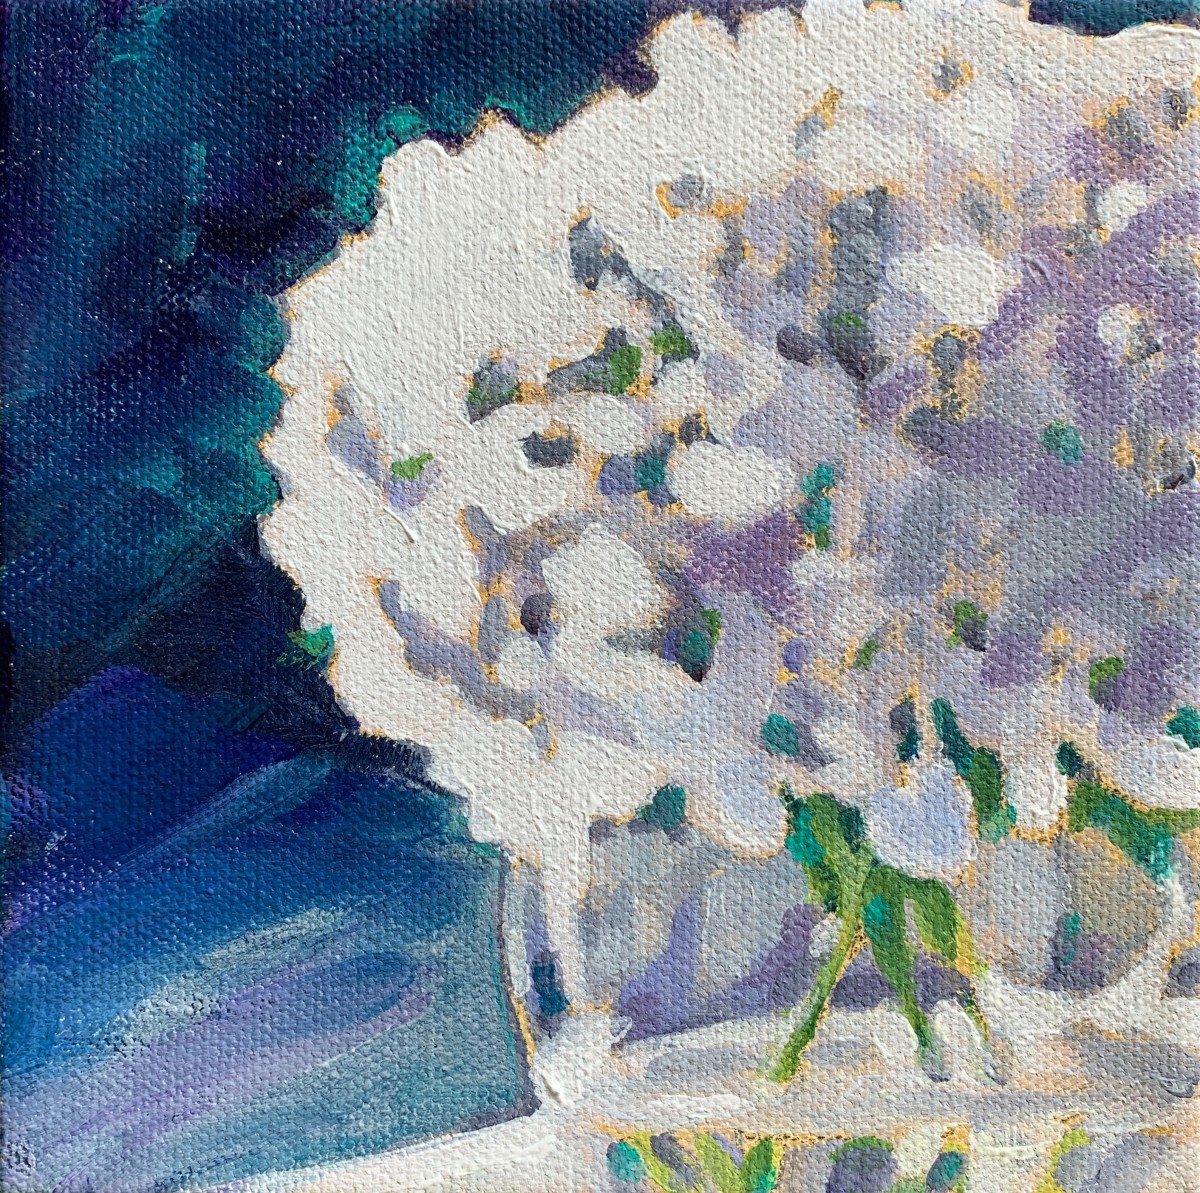 Hydrangea series: Lilac by Marcia Hoeck 